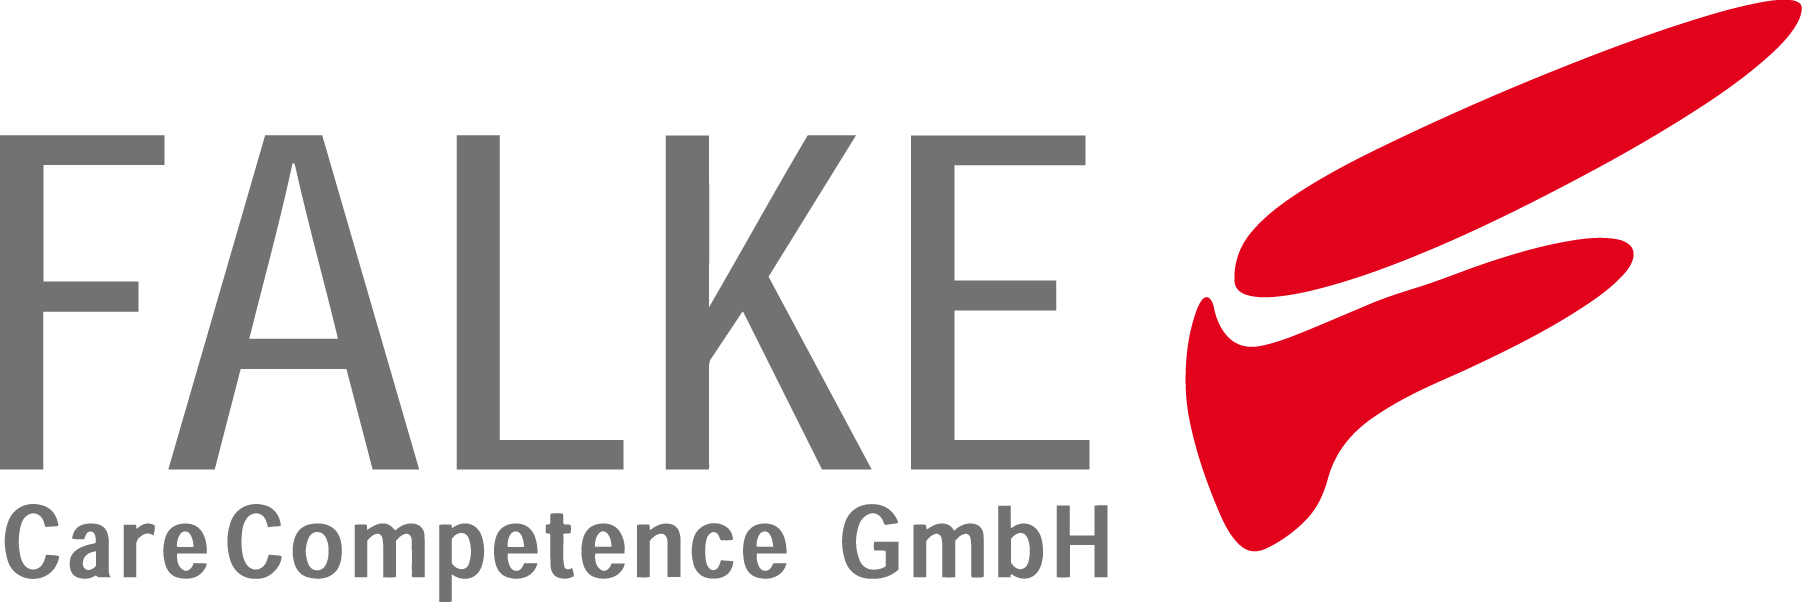 FALKE Care Competence GmbH 